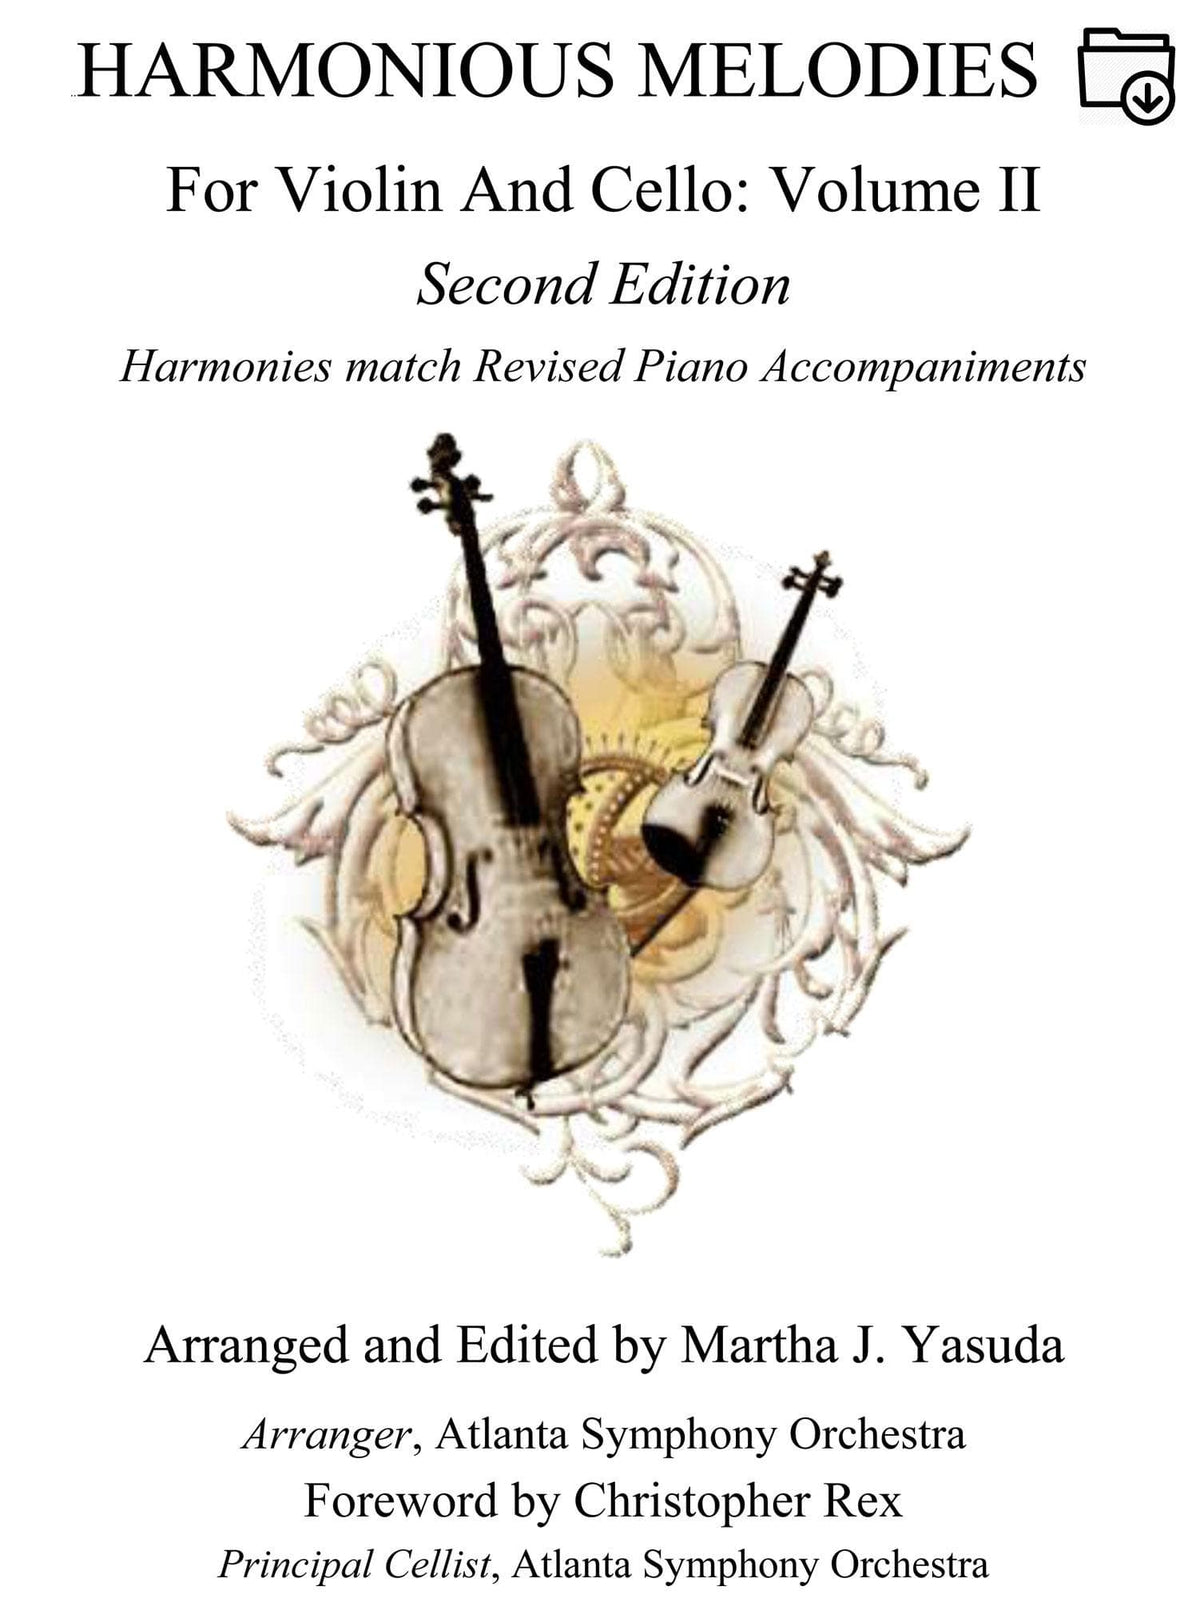 Yasuda, Martha - Harmonious Melodies For Violin And Cello, Volume II, 2nd Edition - Digital Download